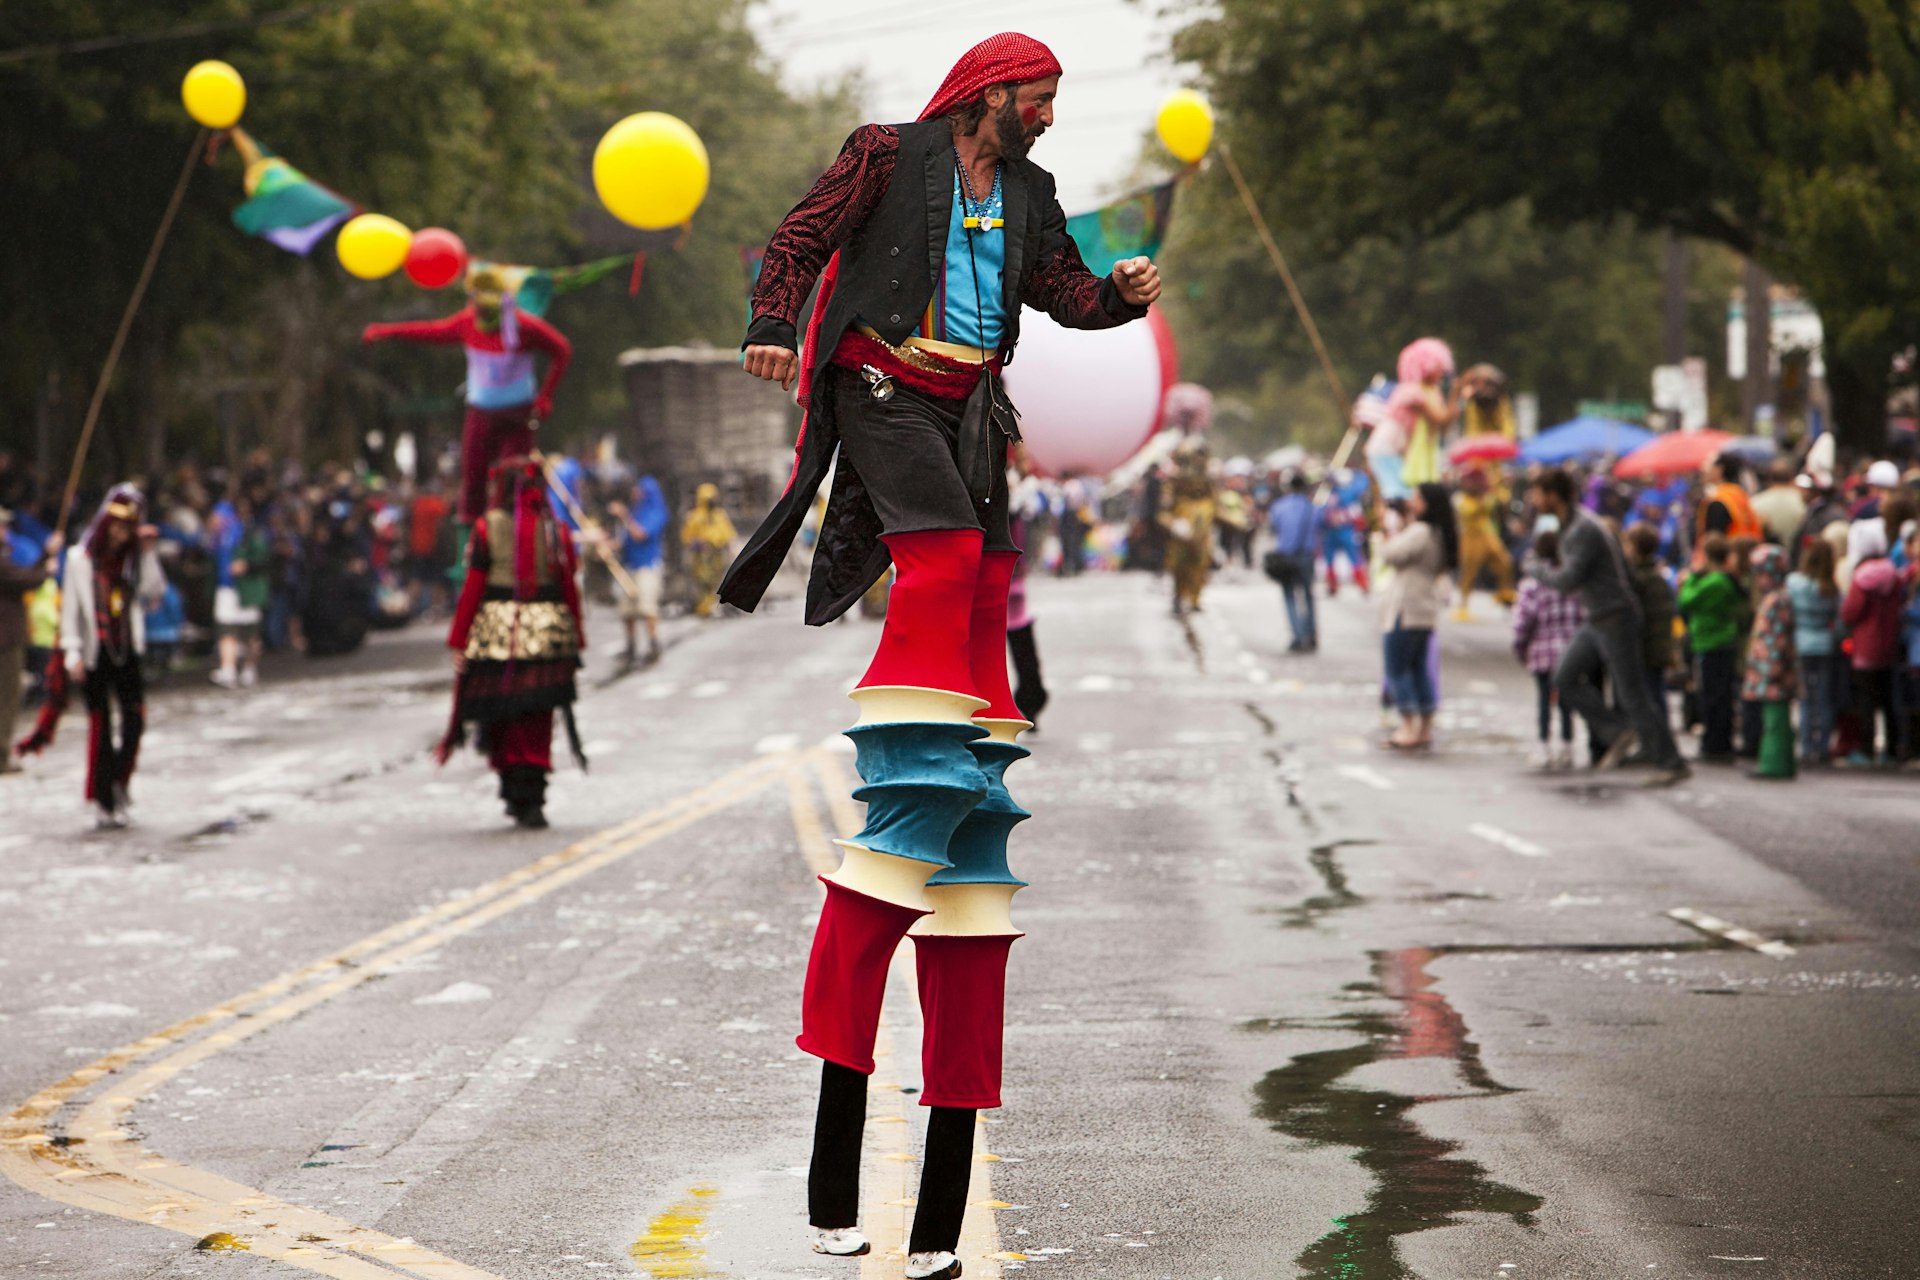 A stilt walker at the Fremont Solstice Day Parade. Image by Matt Ragen / Shutterstock